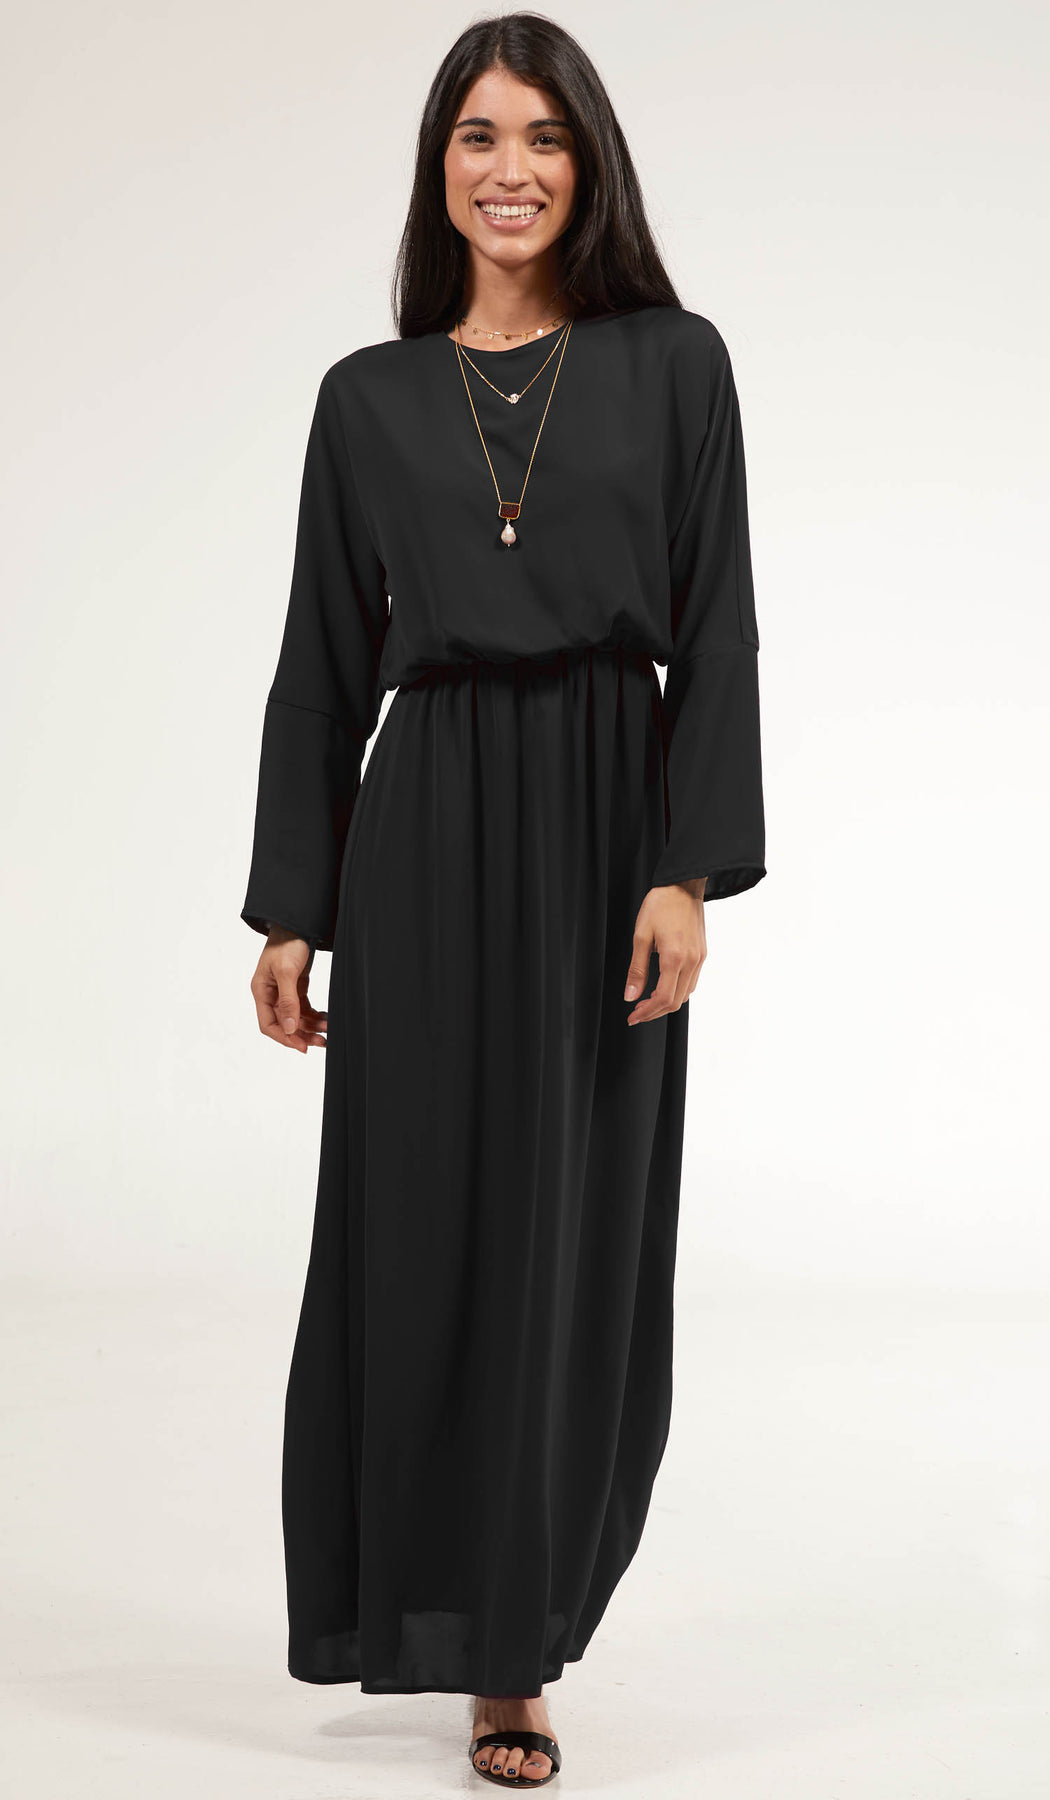 Chic Long Sleeve Modest Muslim Dresses Abayas and Jilbabs | Artizara ...